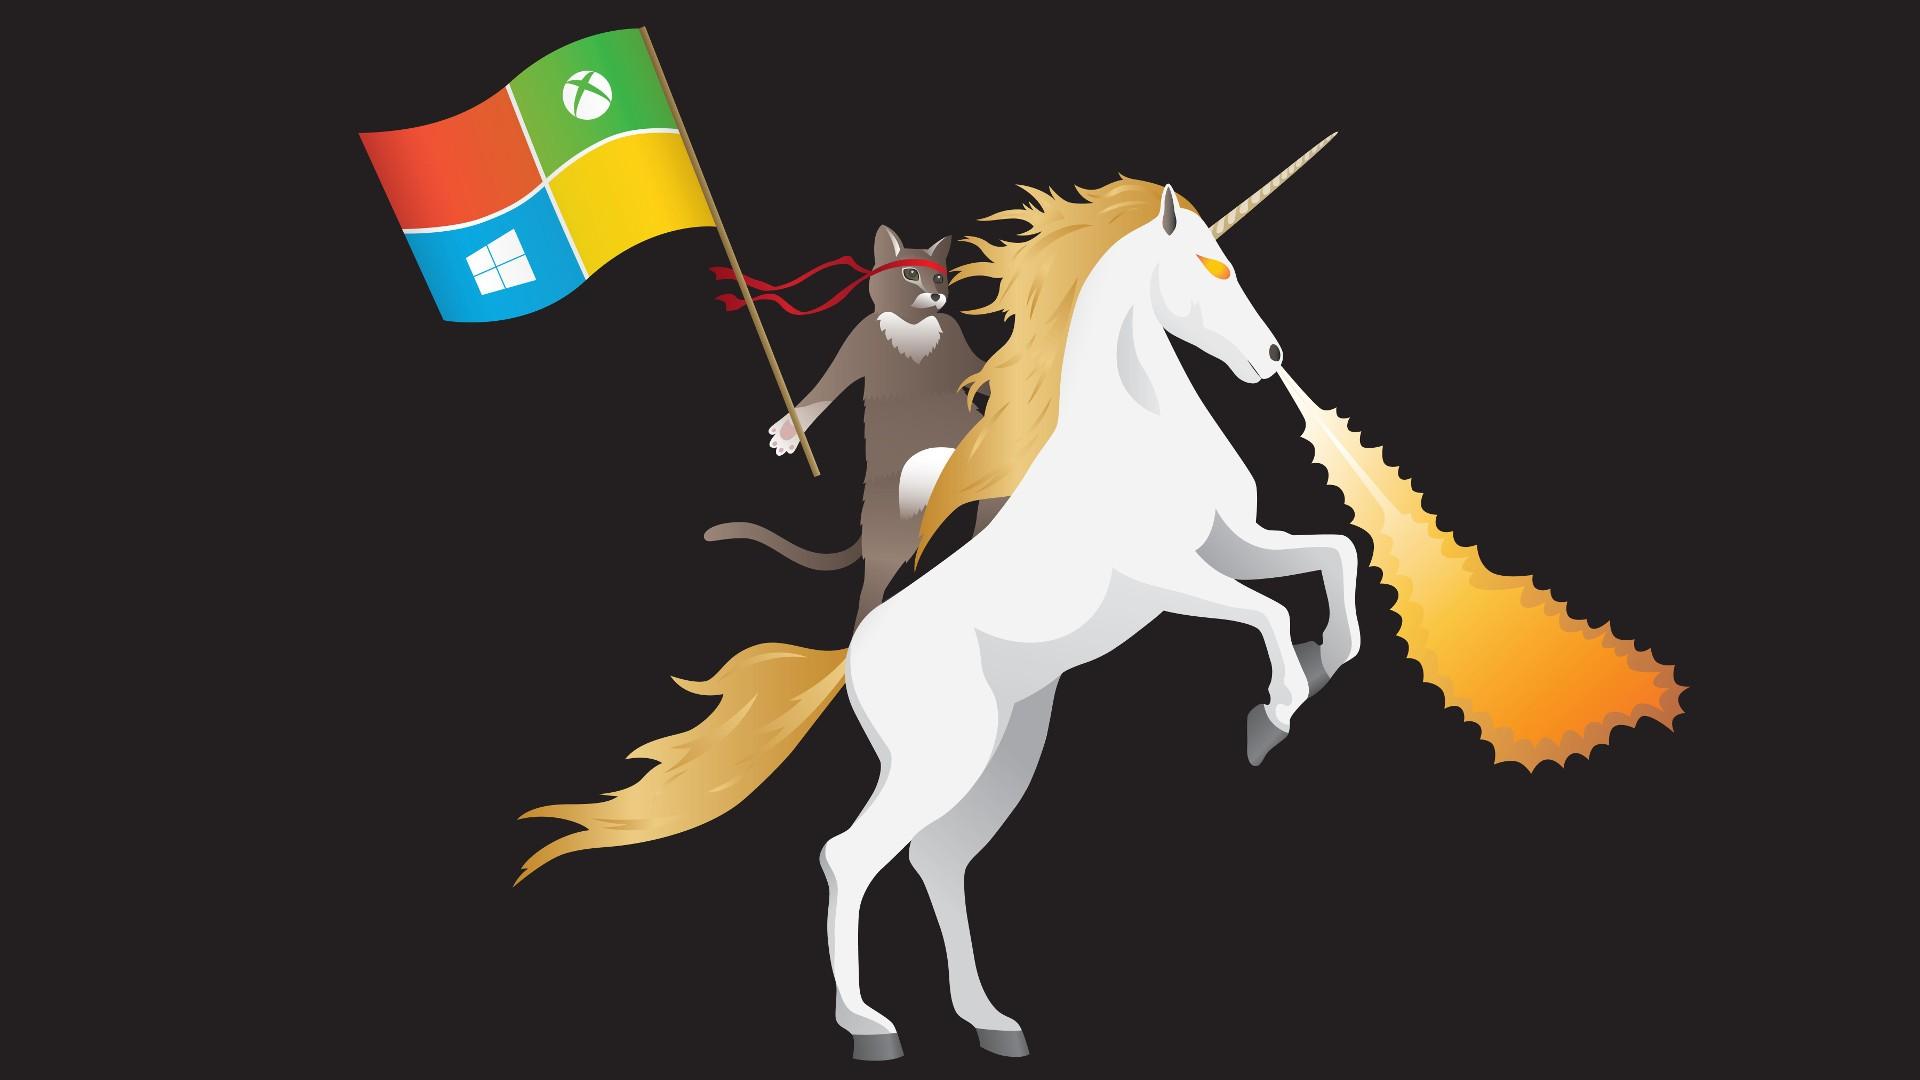 Windows 10 Unicorn Wallpaper